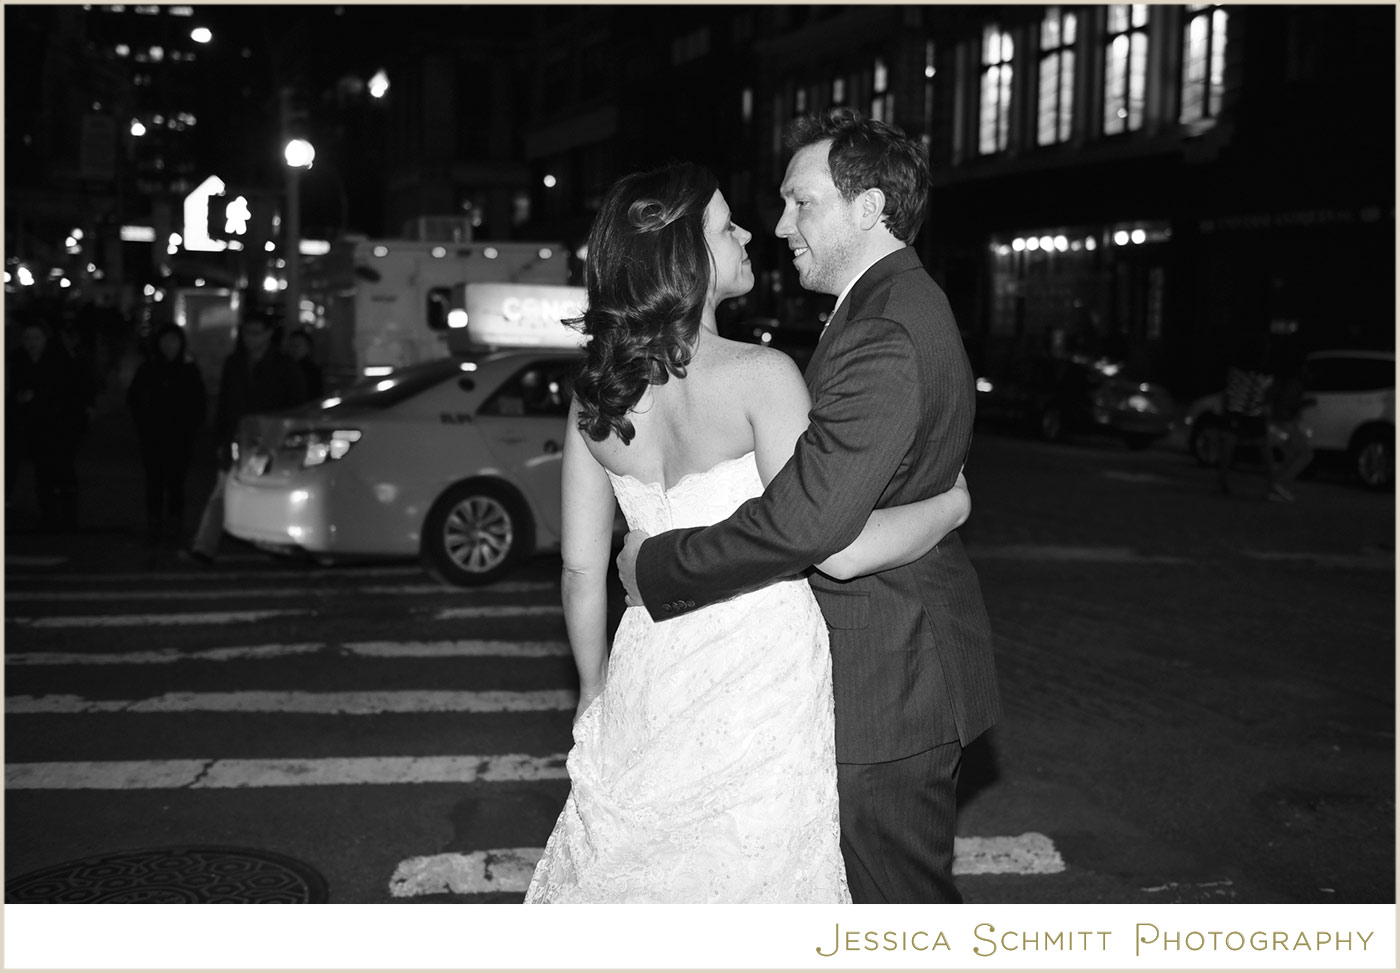 union square wedding photography nyc nighttime